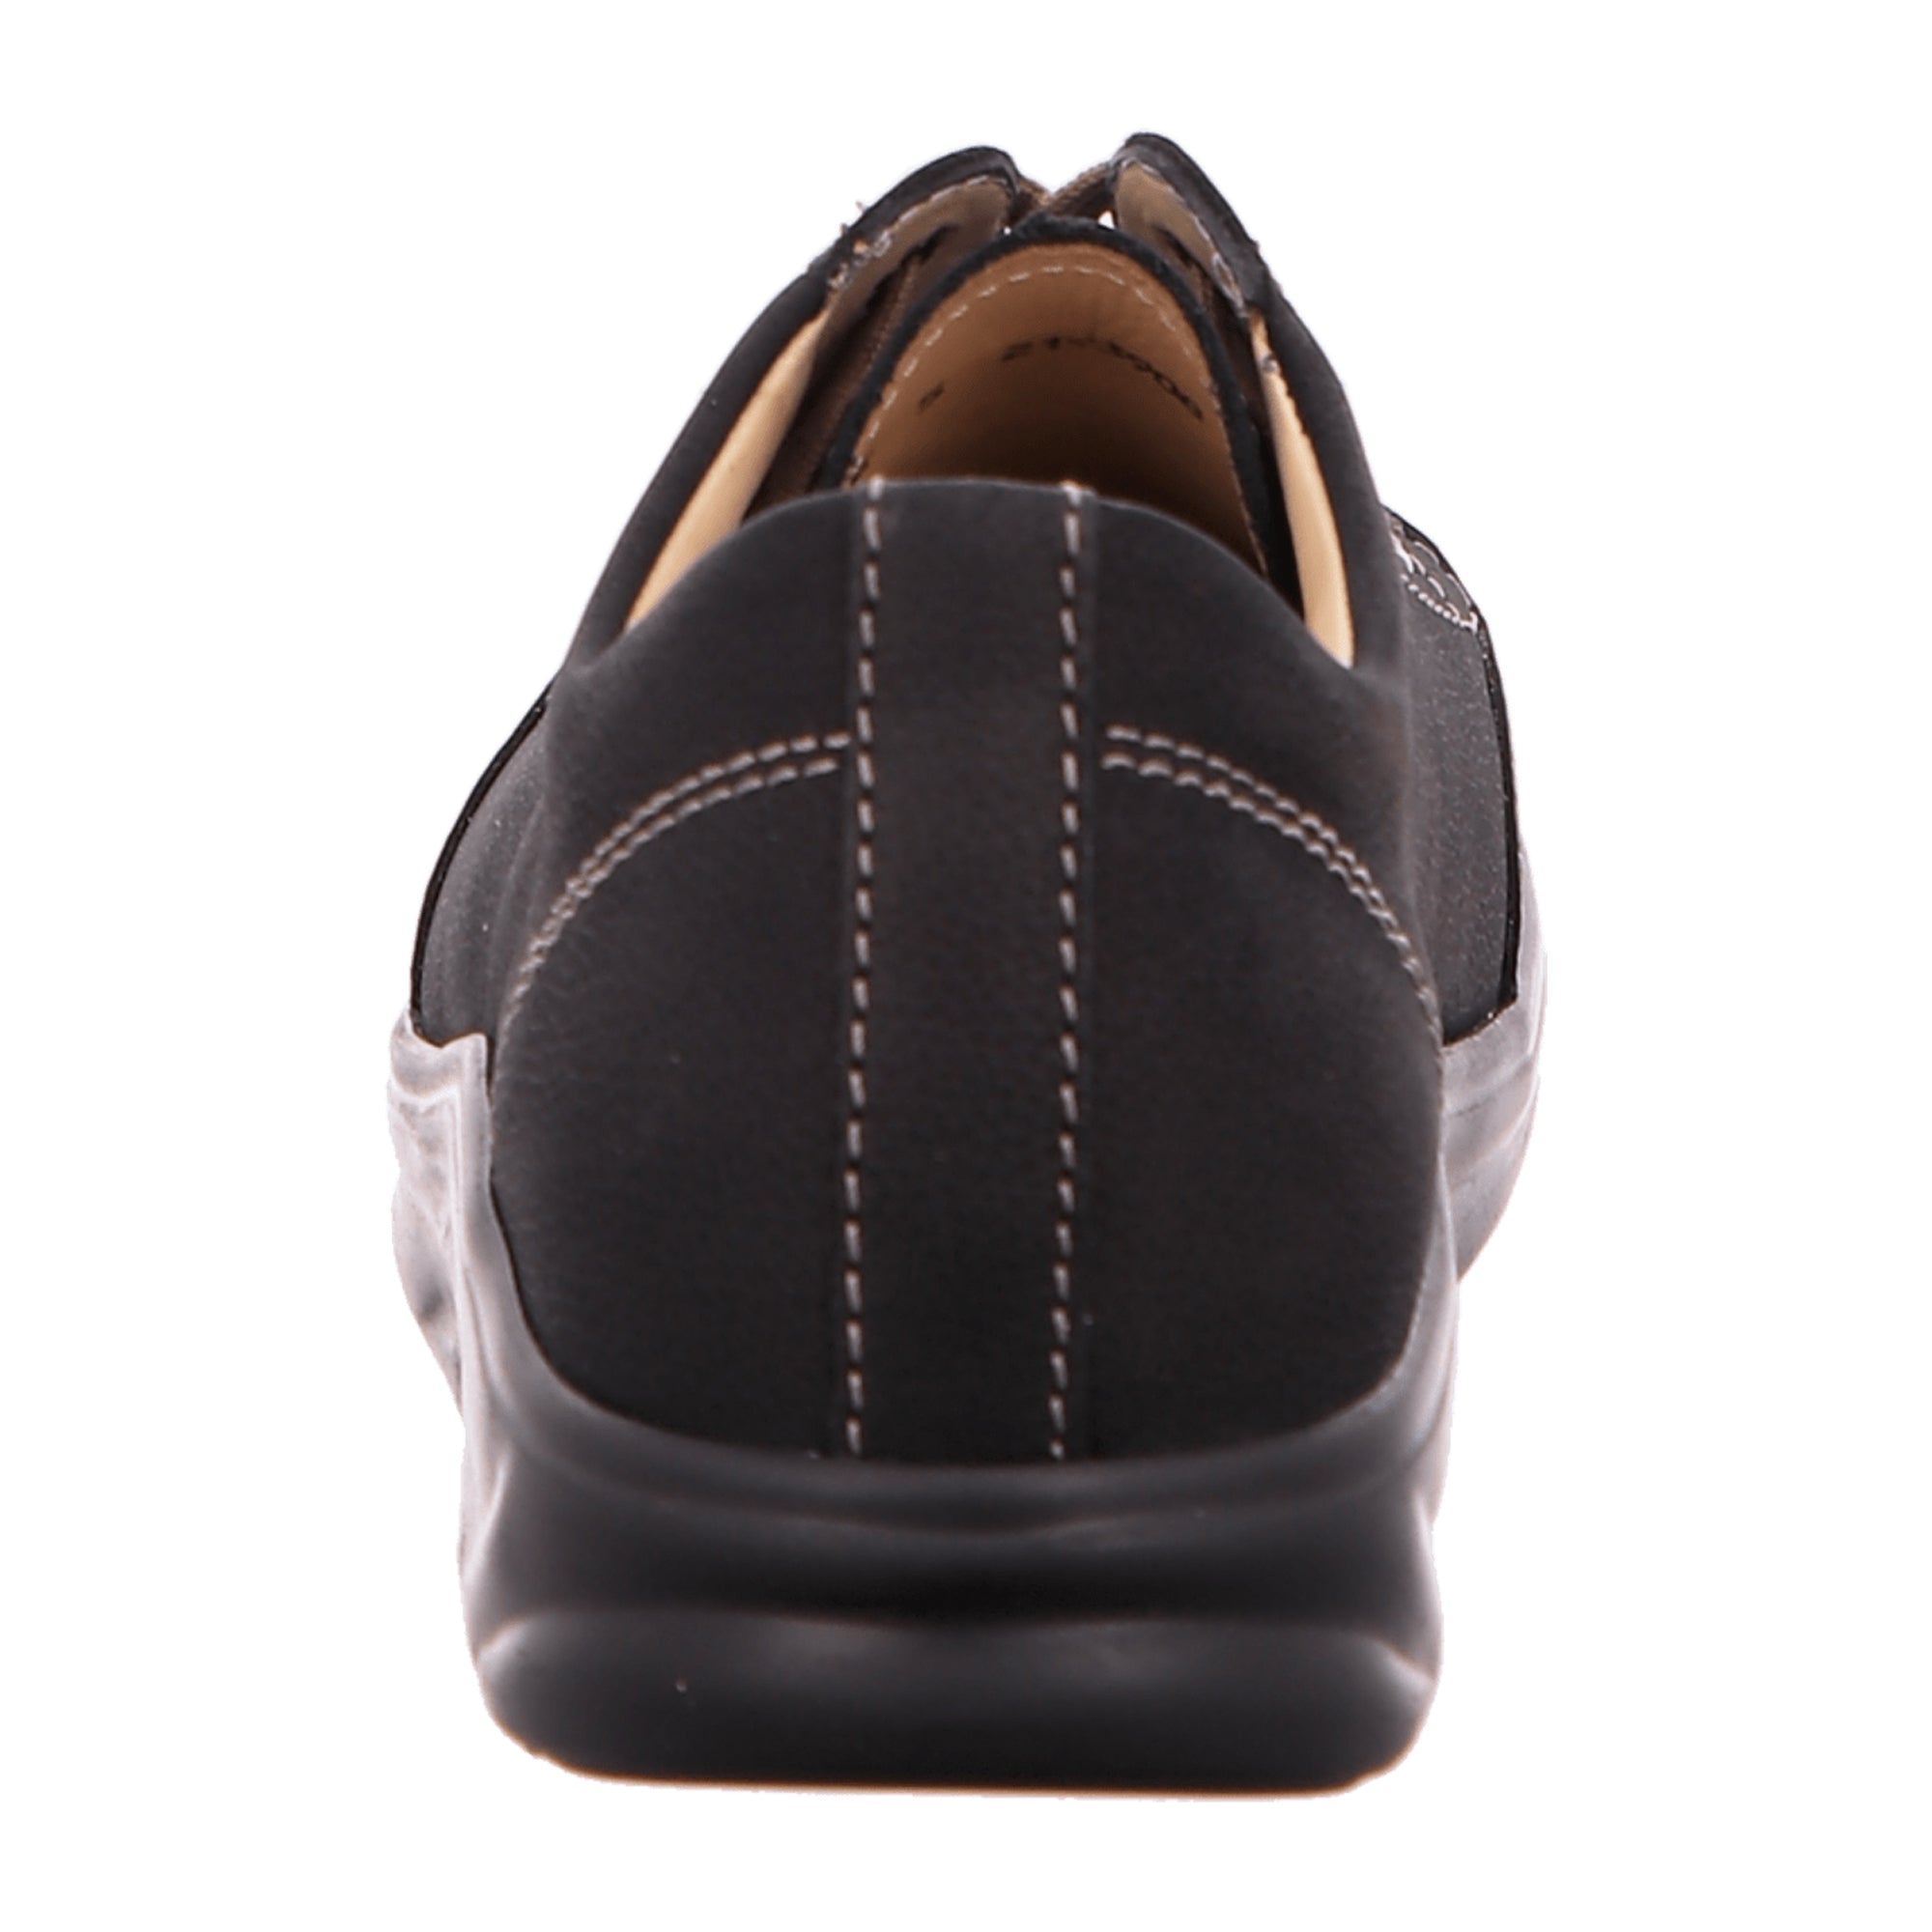 Finn Comfort Women's Comfortable Black Lace-Up Shoes – Stylish & Durable